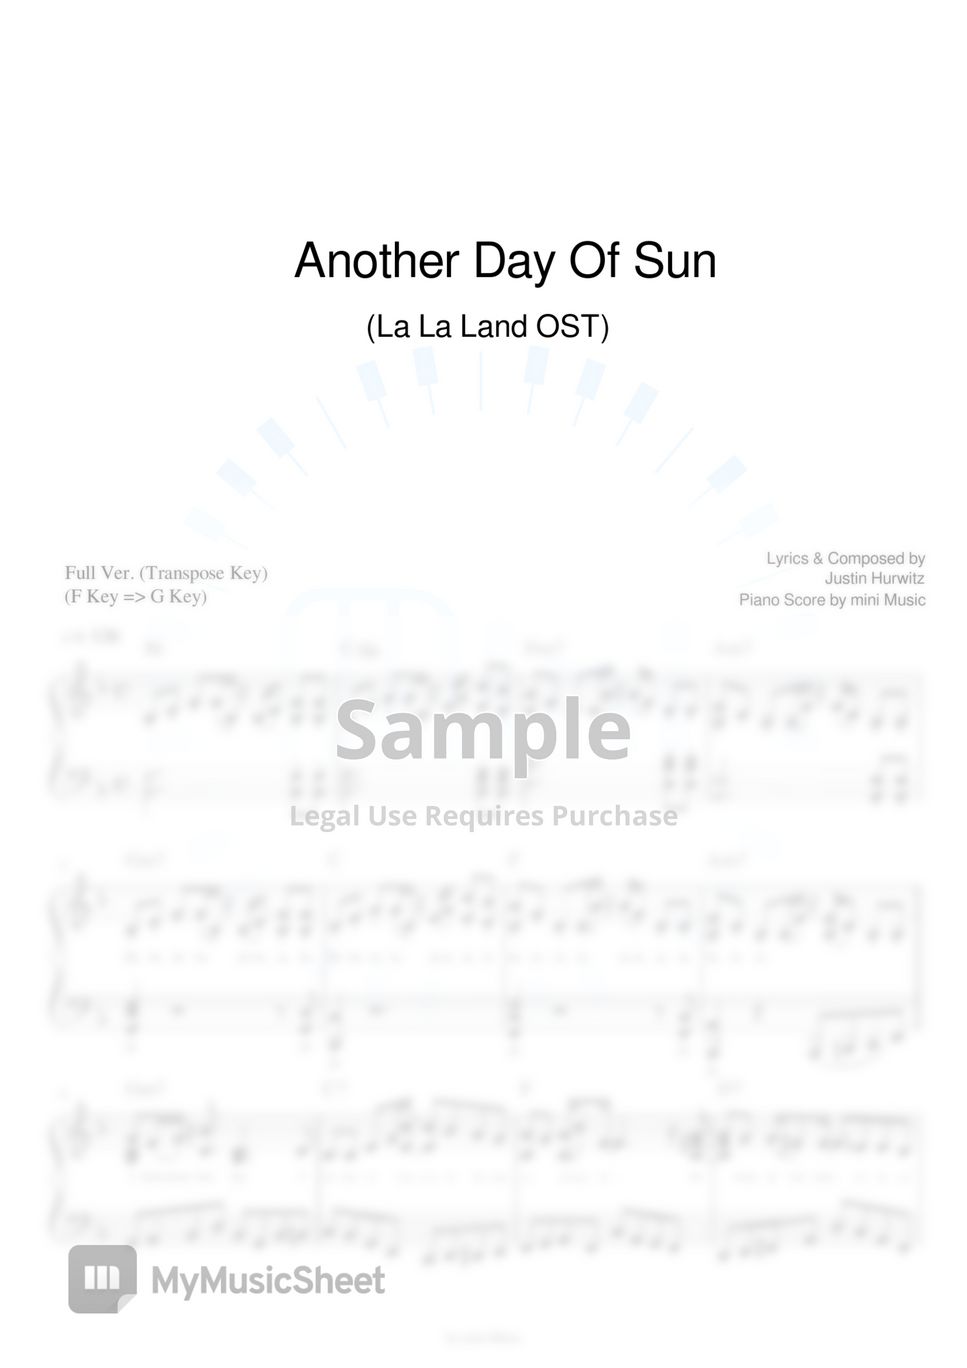 La La Land OST (라라랜드 OST) - Another Day Of Sun (Full Ver.) (Eb Key + F Key) by mini Music